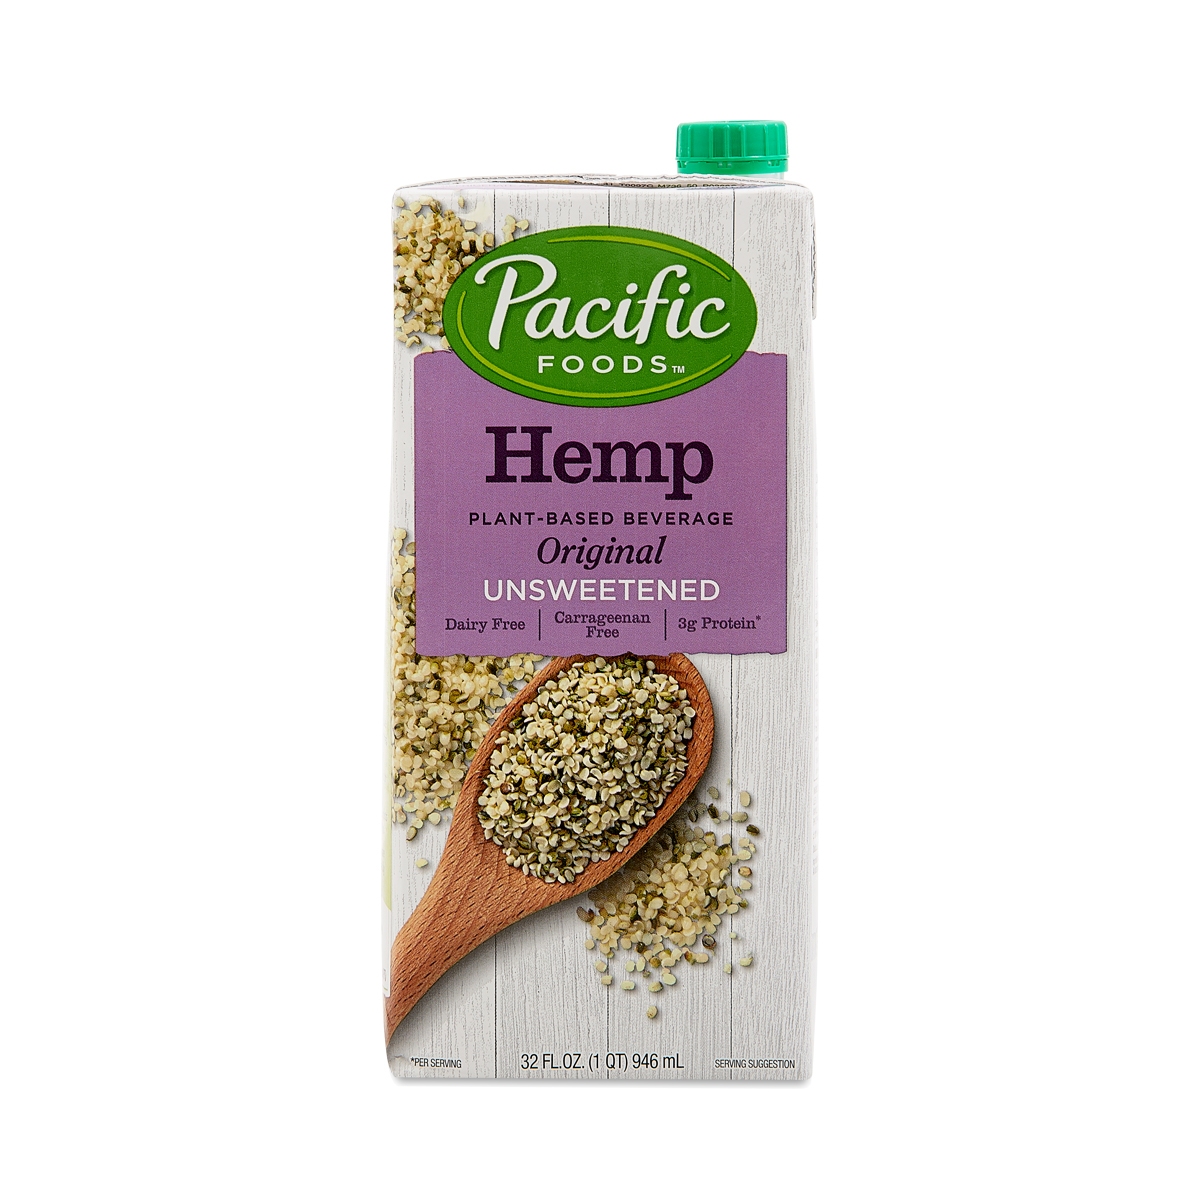 Pacific Foods Hemp Beverage, Unsweetened Original 32 fl oz carton